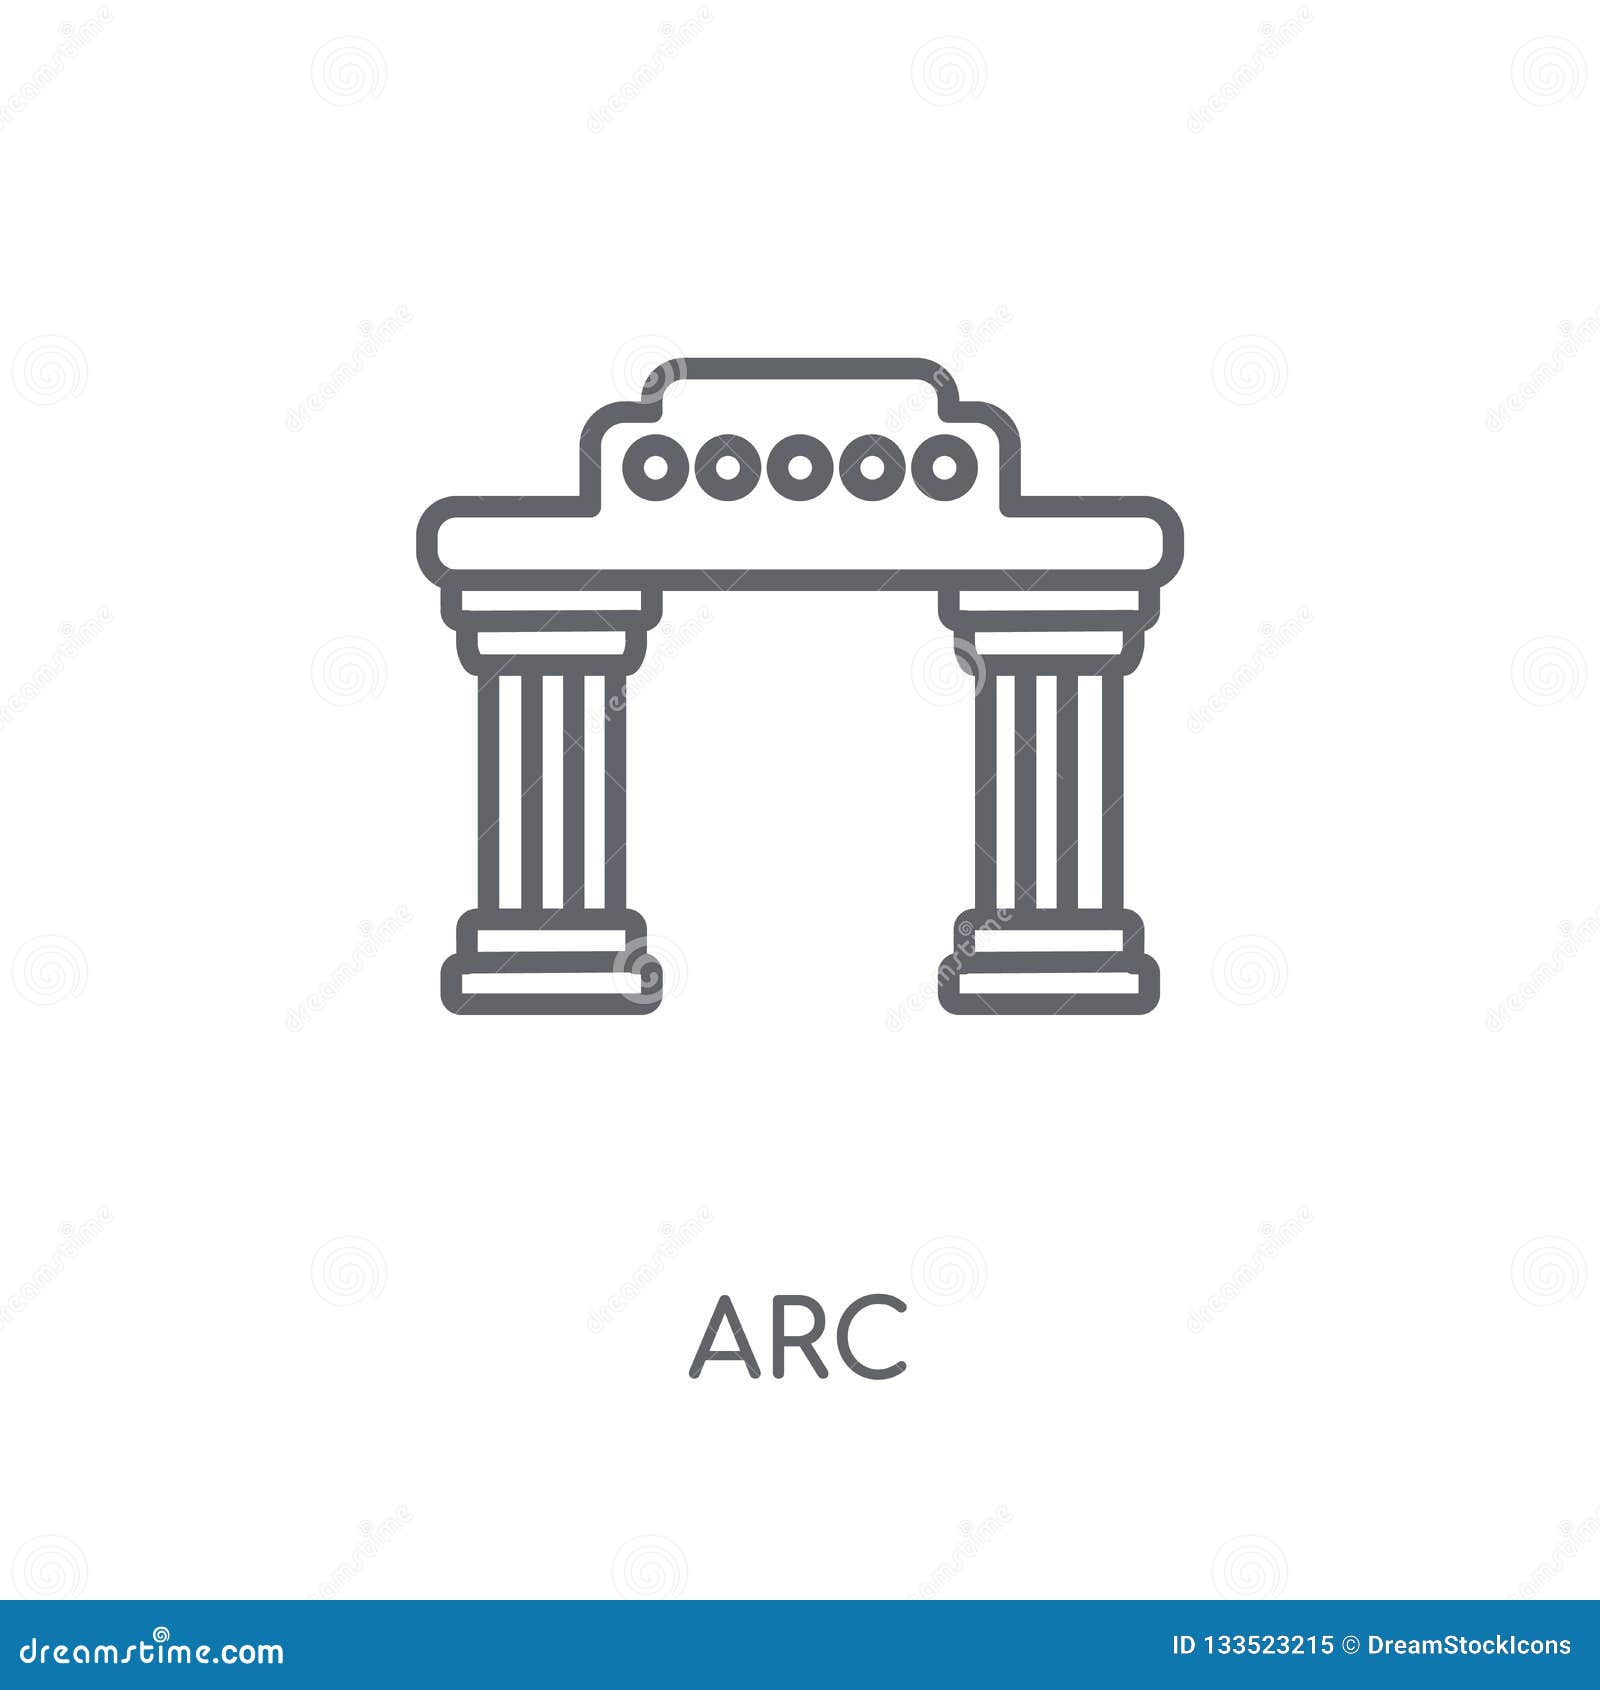 arc linear icon. modern outline arc logo concept on white backgr